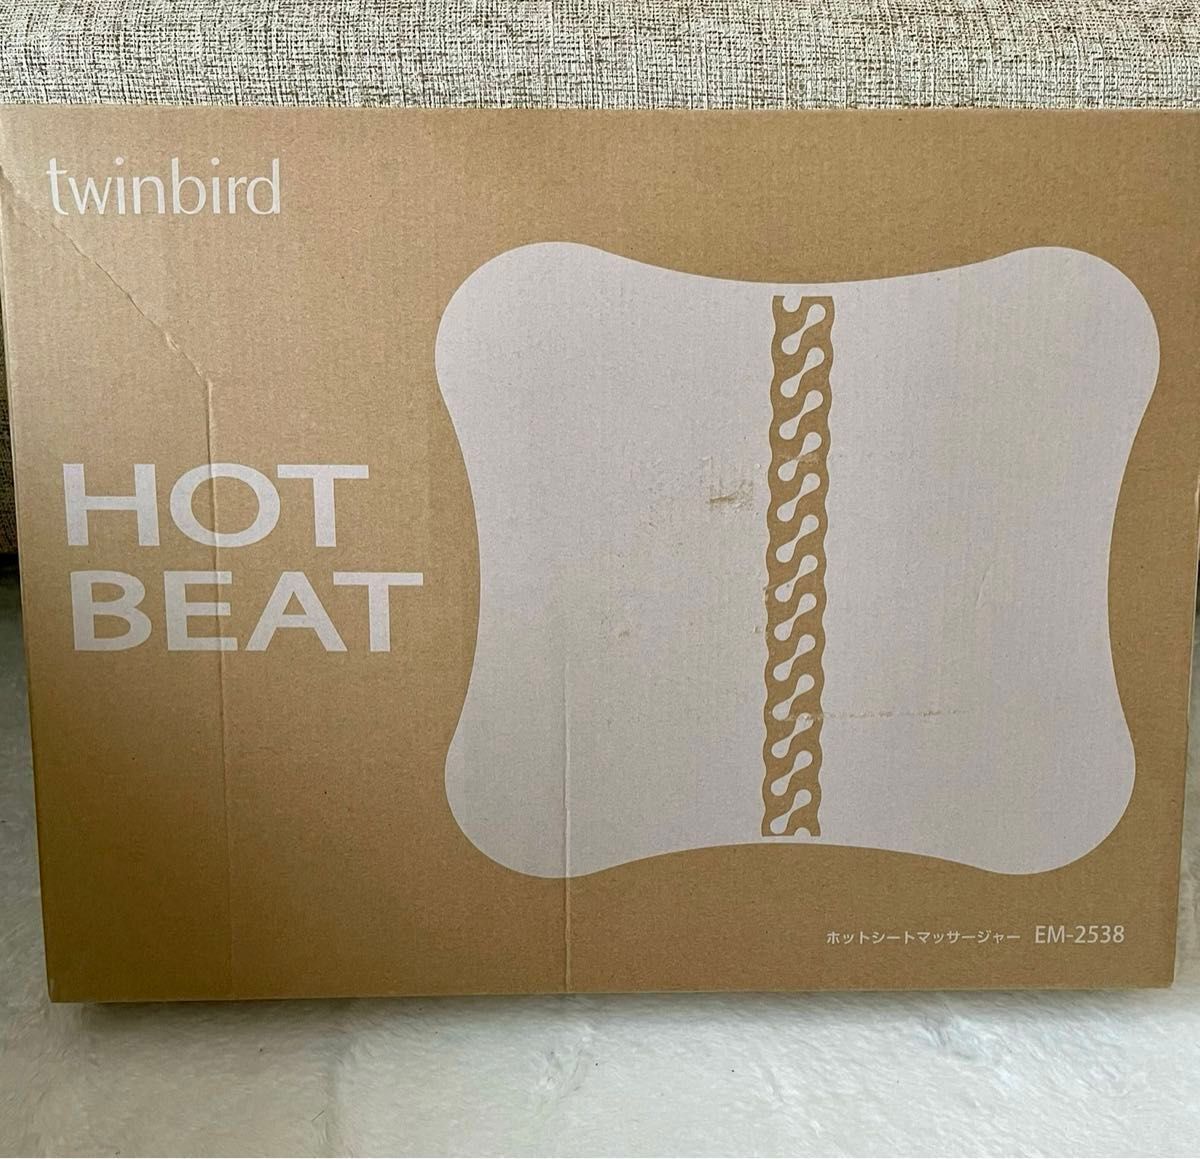 Twinbird Hotbeat シートマッサージャー EM-2538